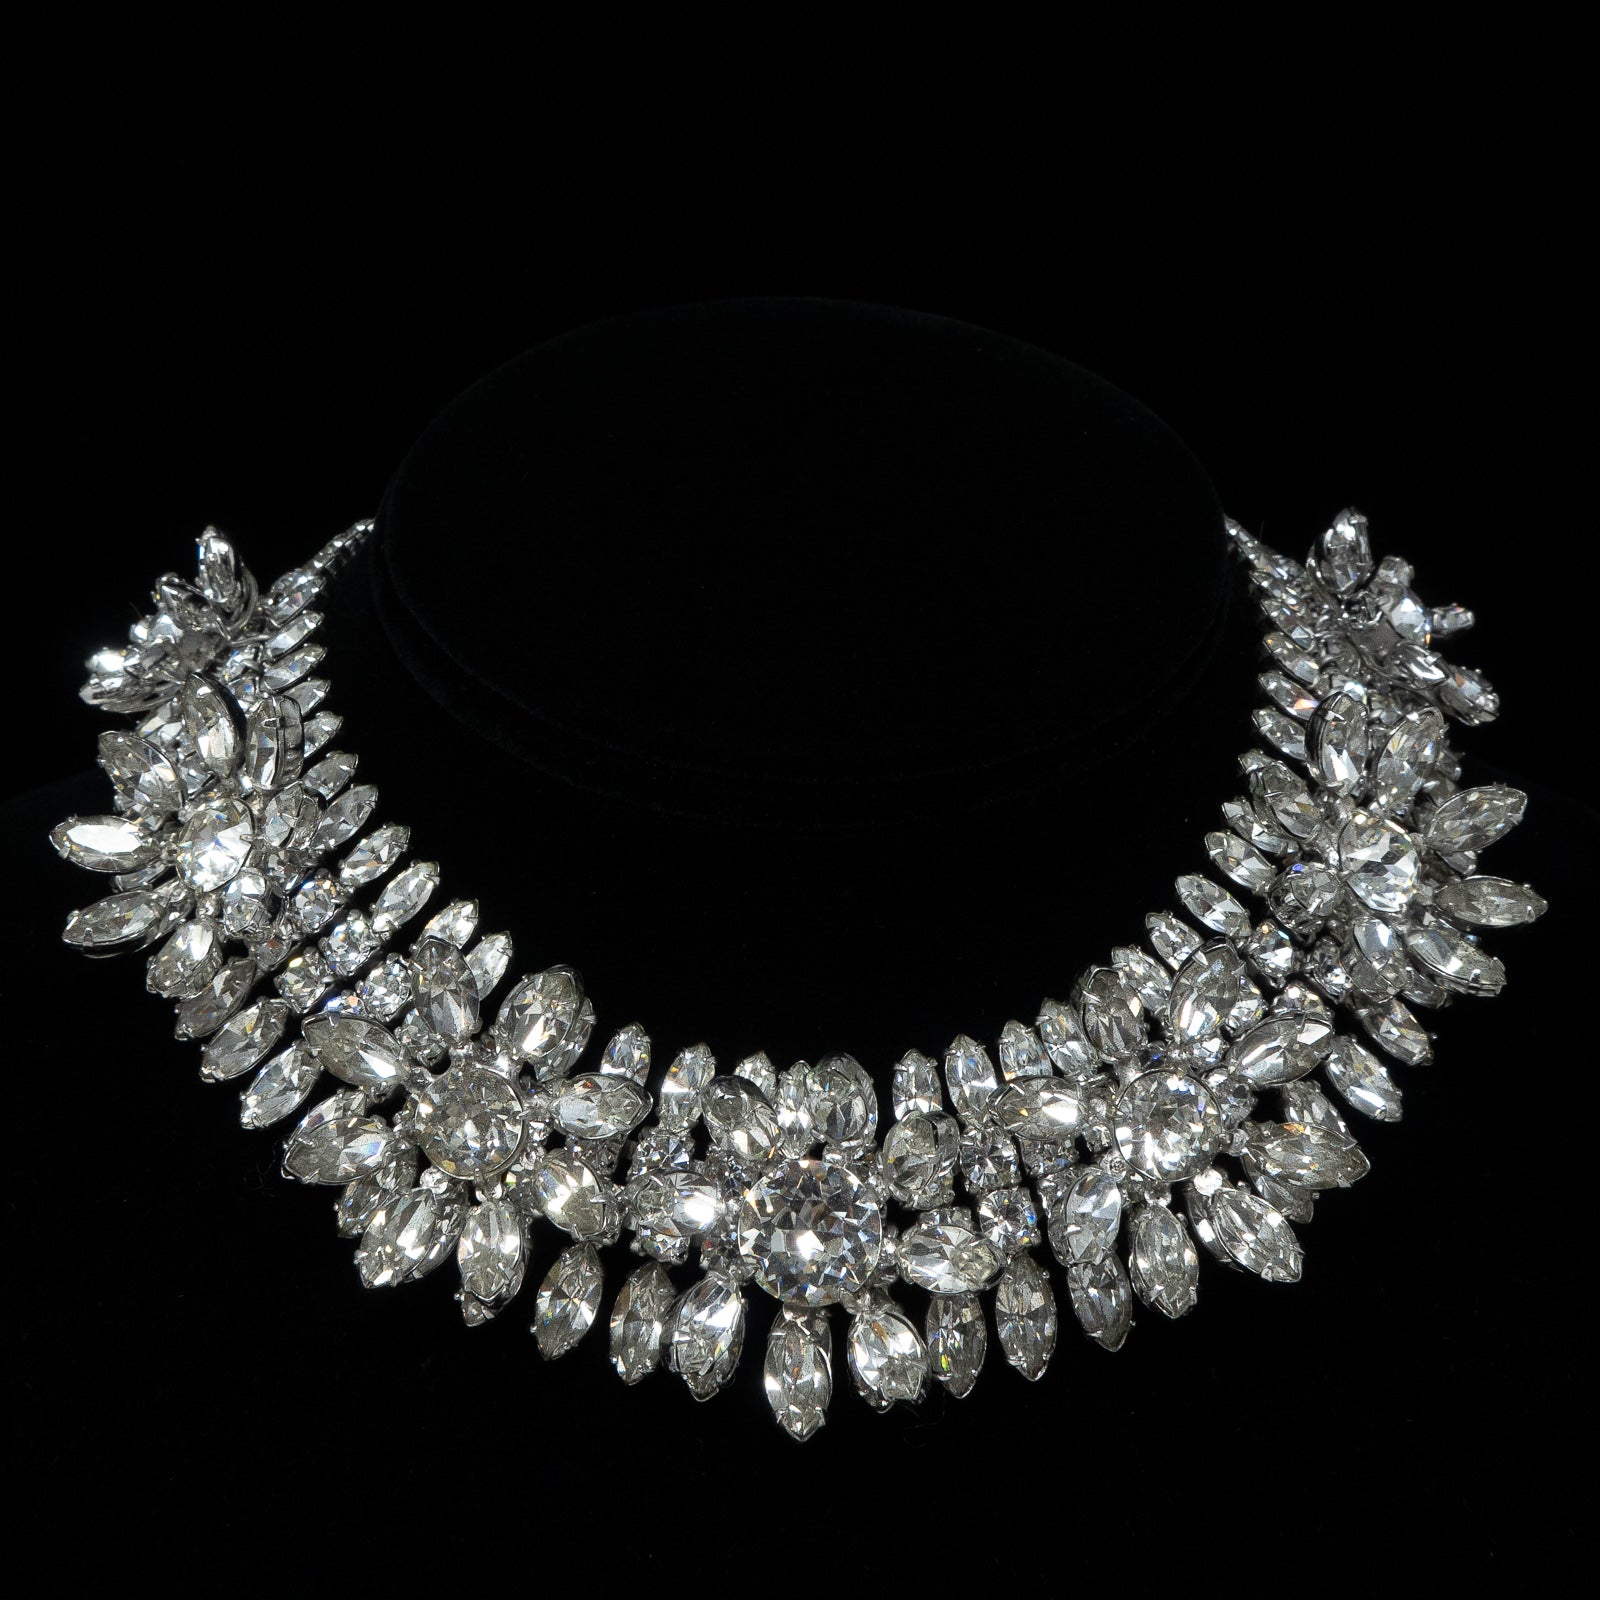 Vintage Rhinestone Necklace, Choker Necklace, Clear R… - Gem